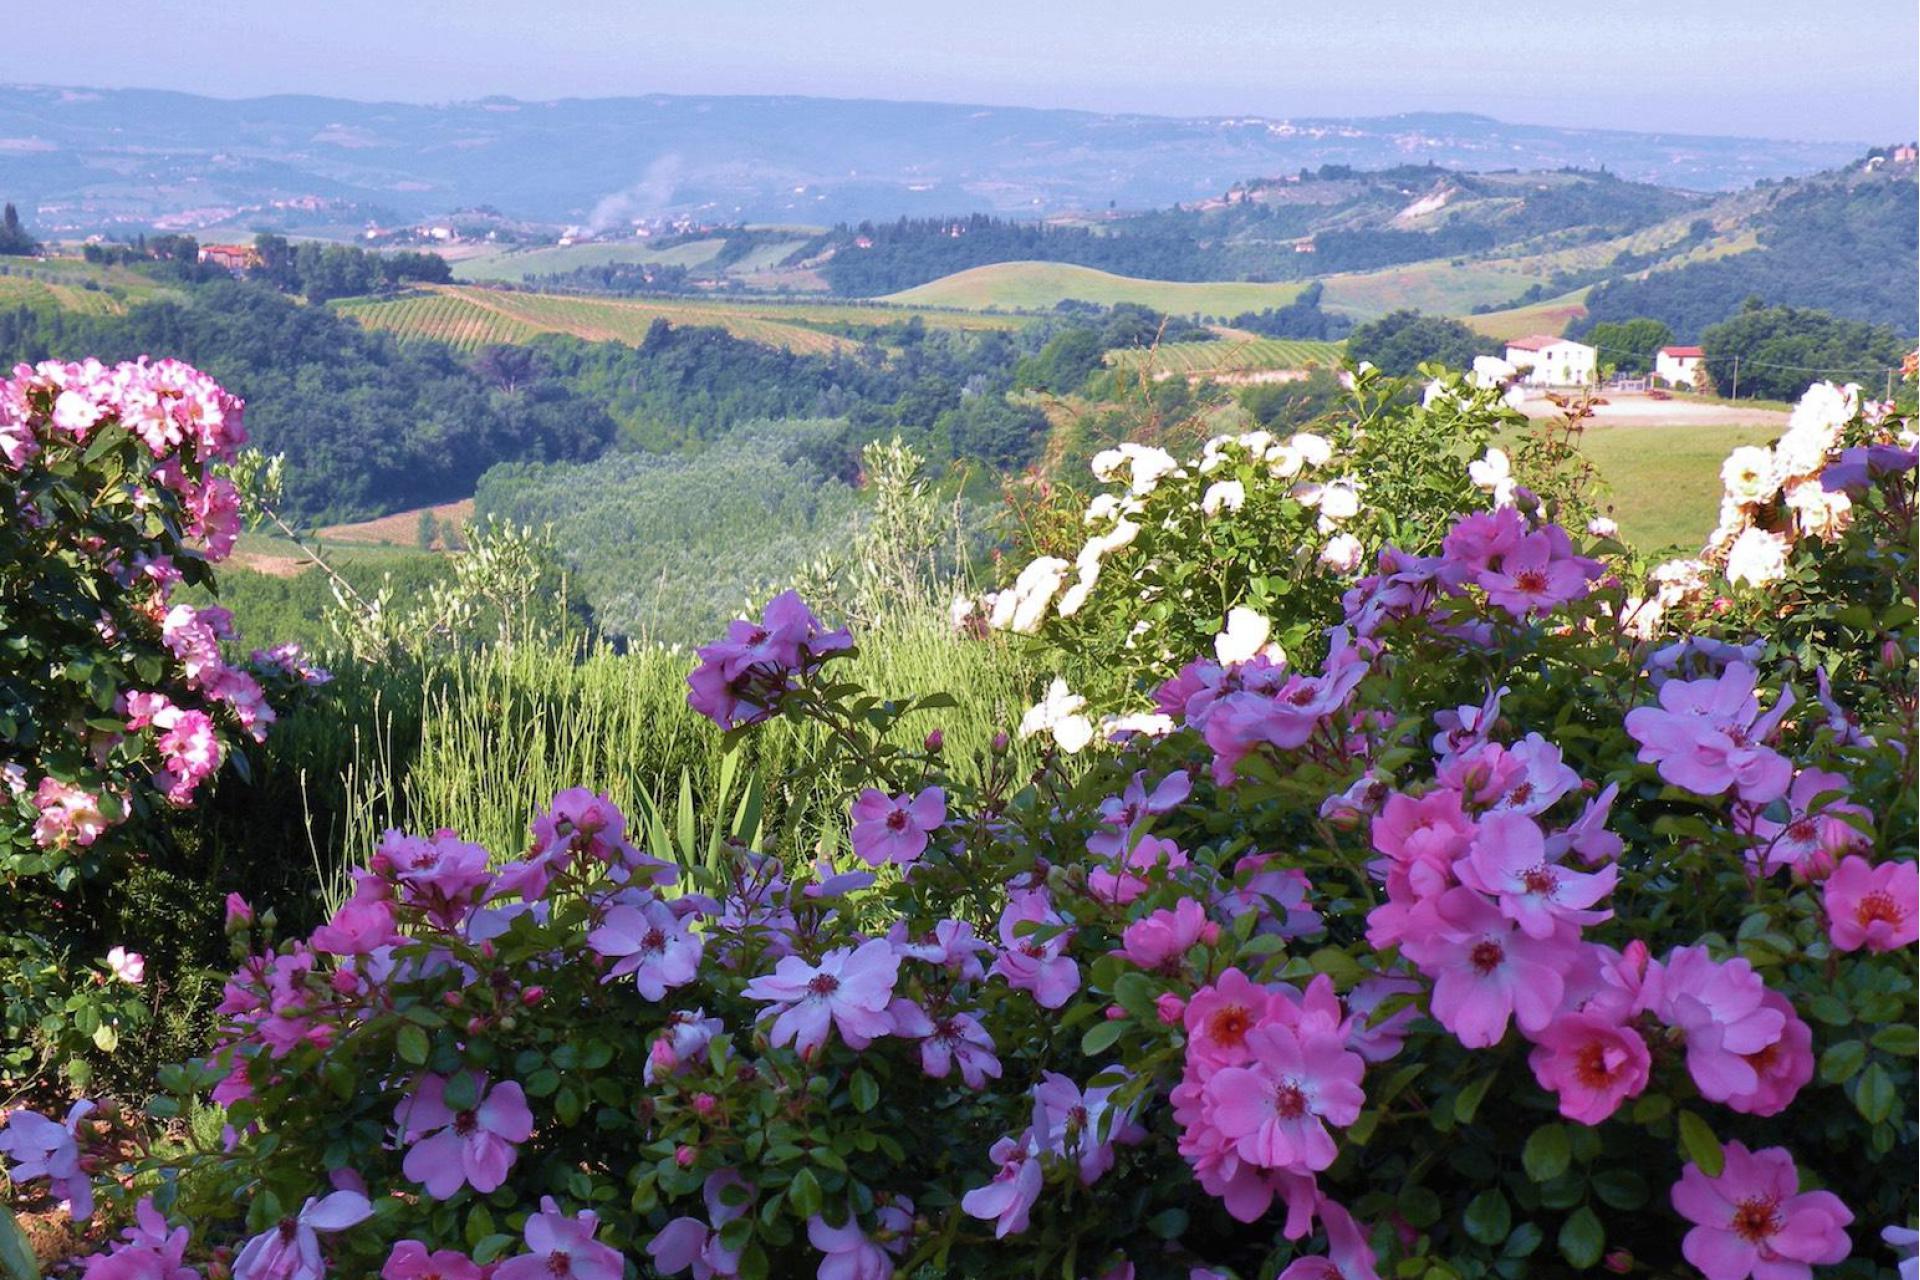 Agriturismo Toscana Agriturismo Toscana in uliveto con vista mozzafiato